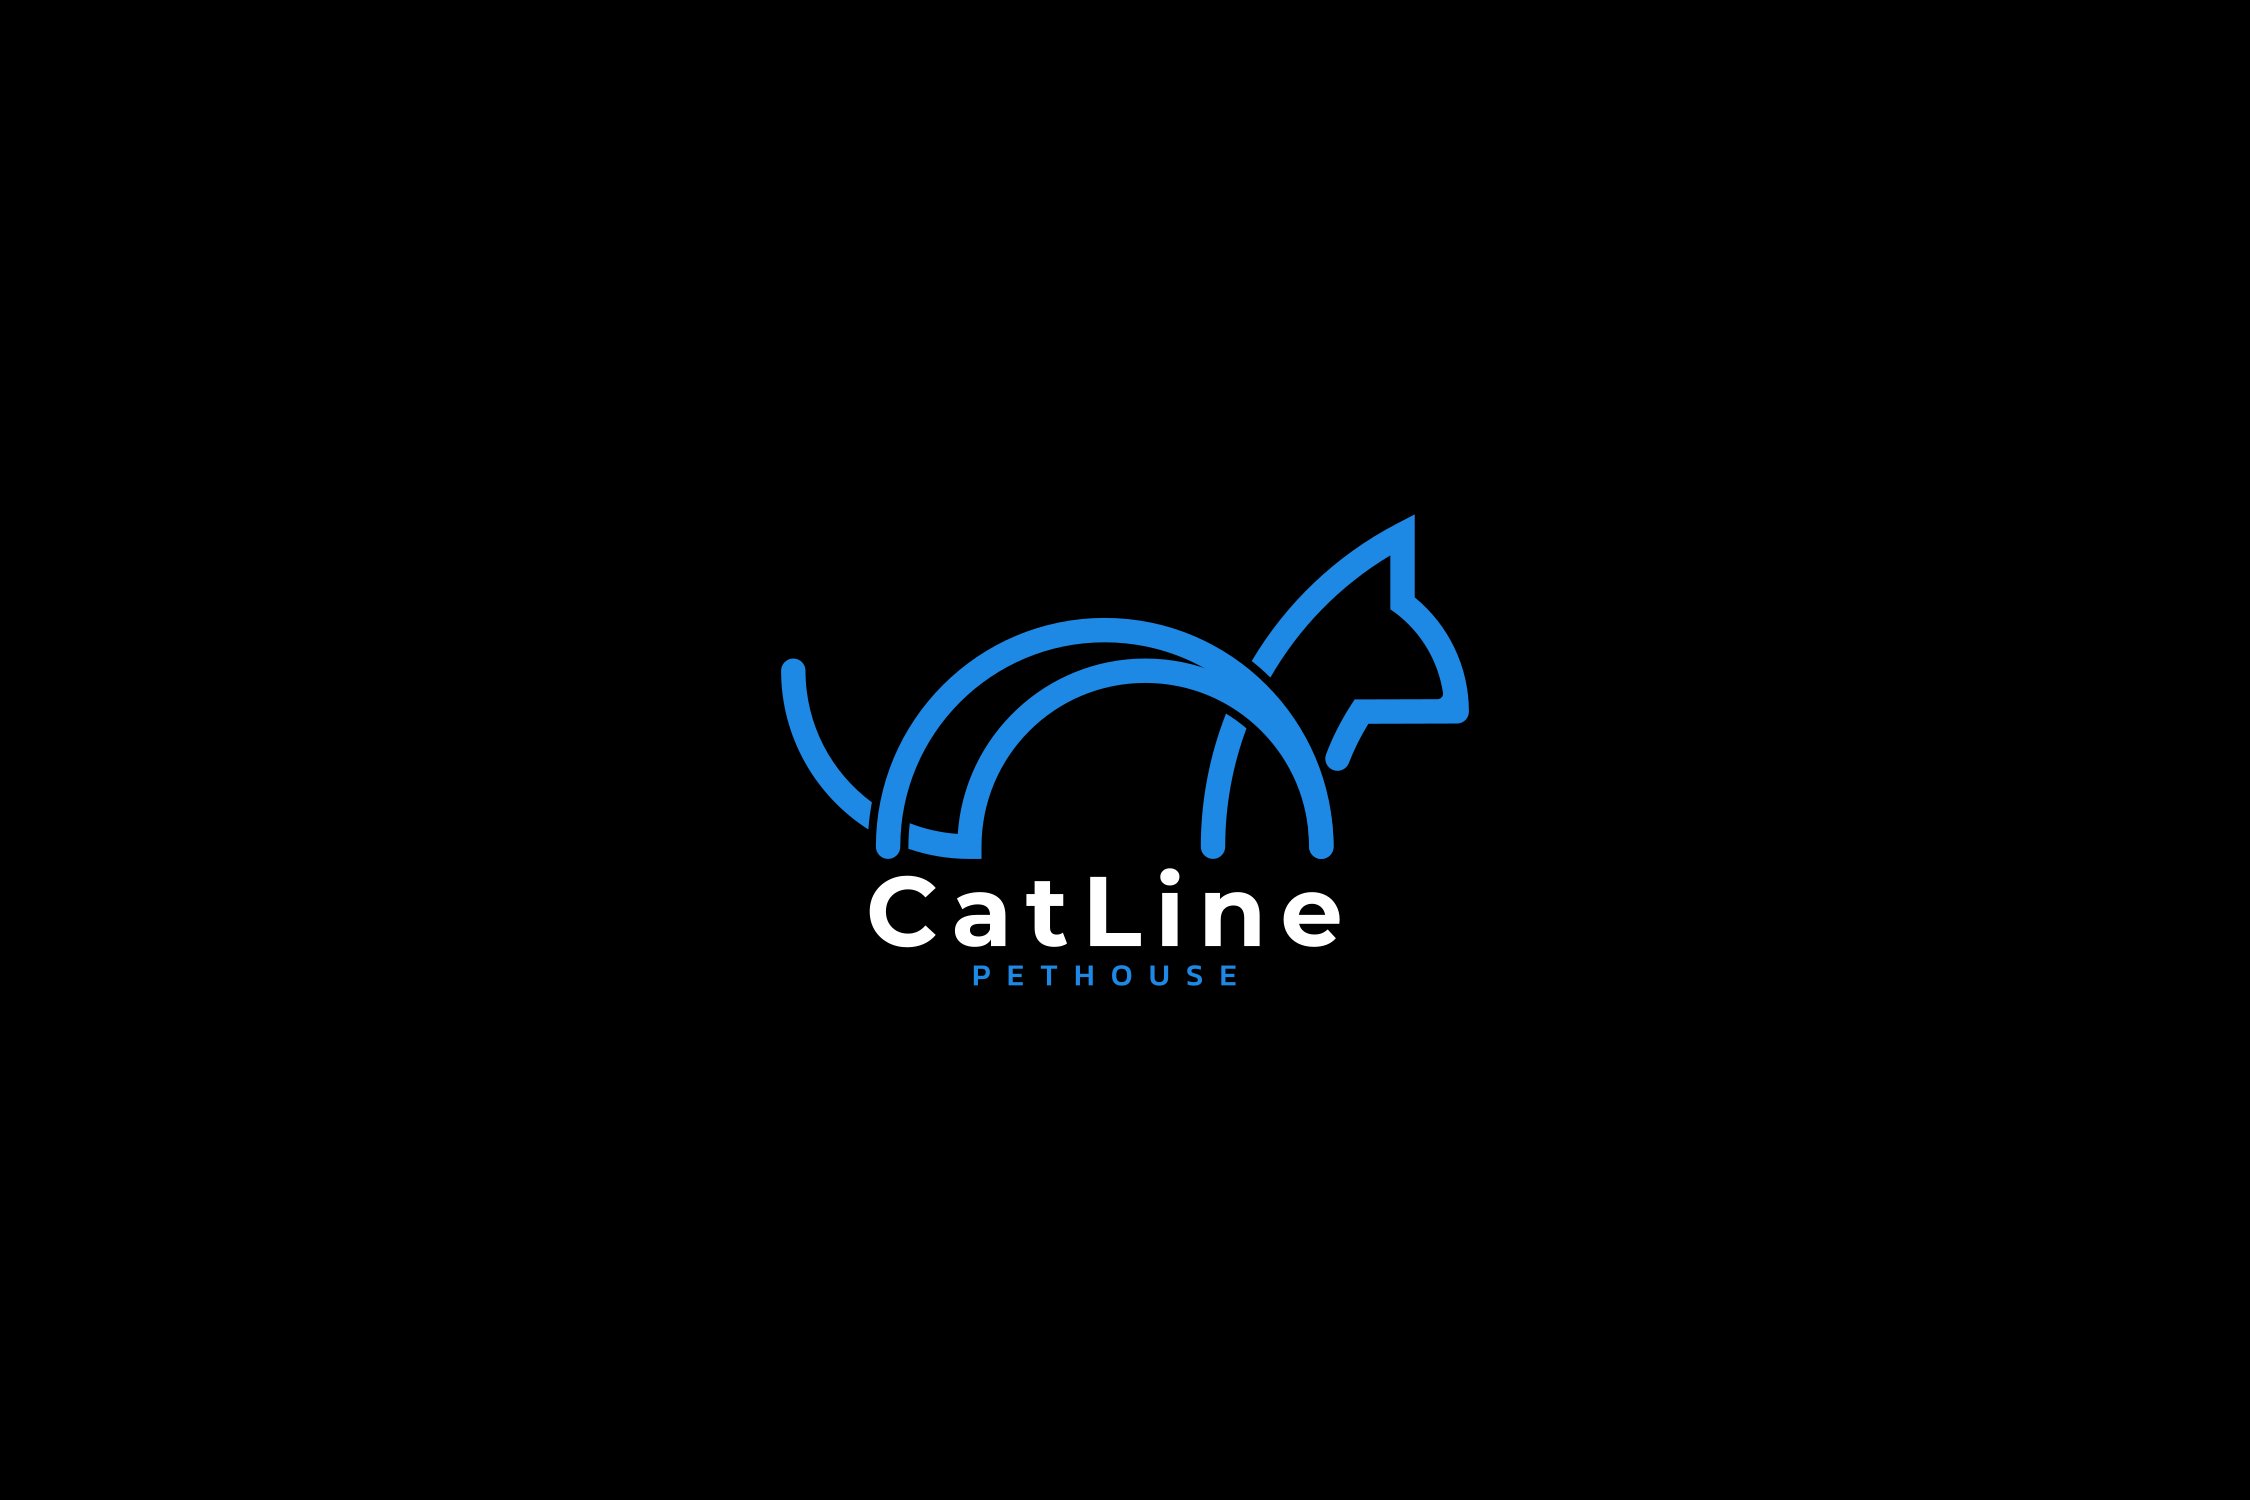 Line Art Cat Logo cover image.